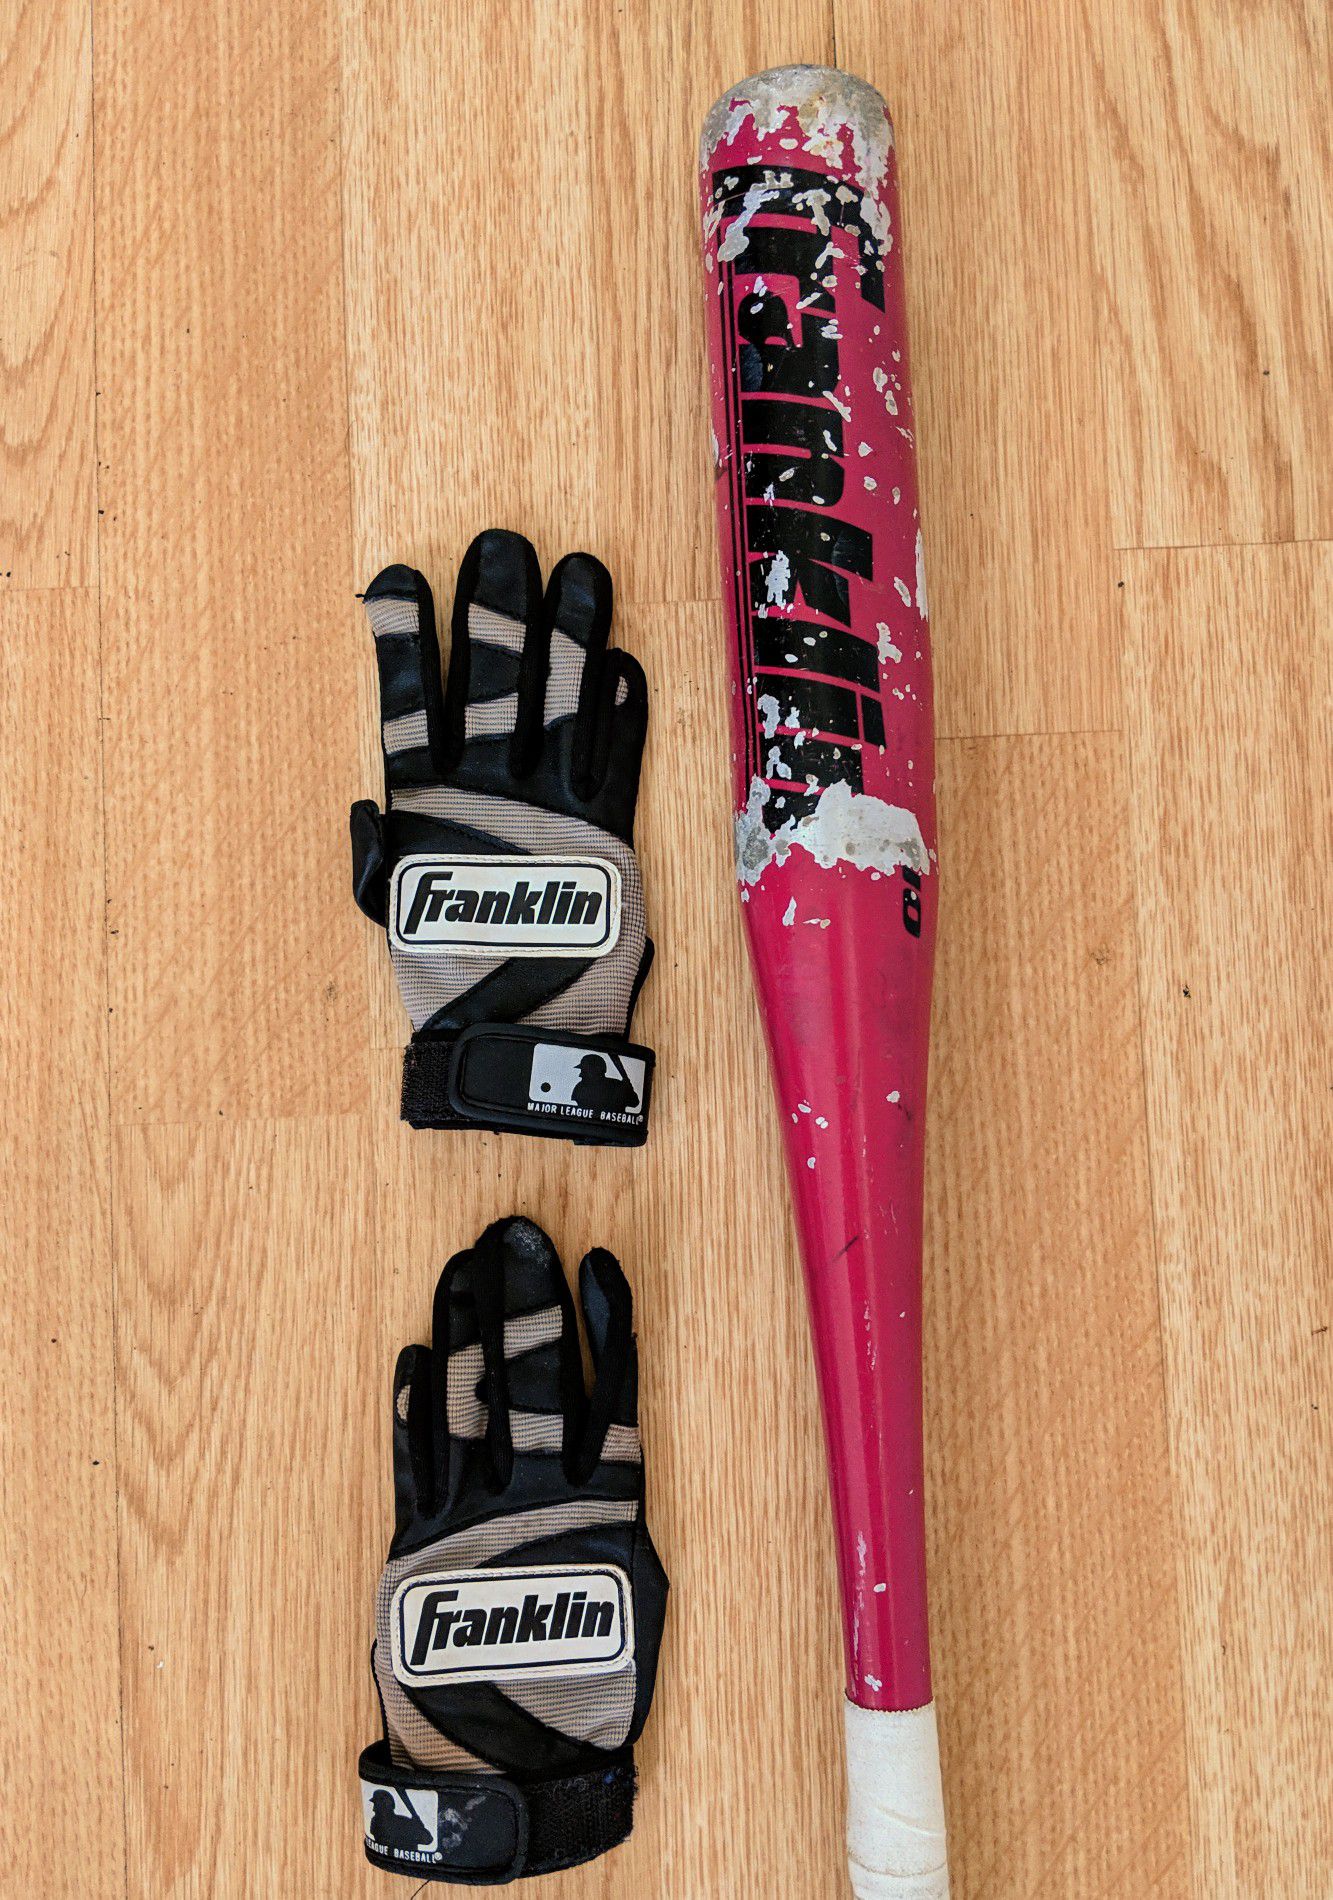 Franklin Teeball Baseball Aluminum Bat & Batting Gloves